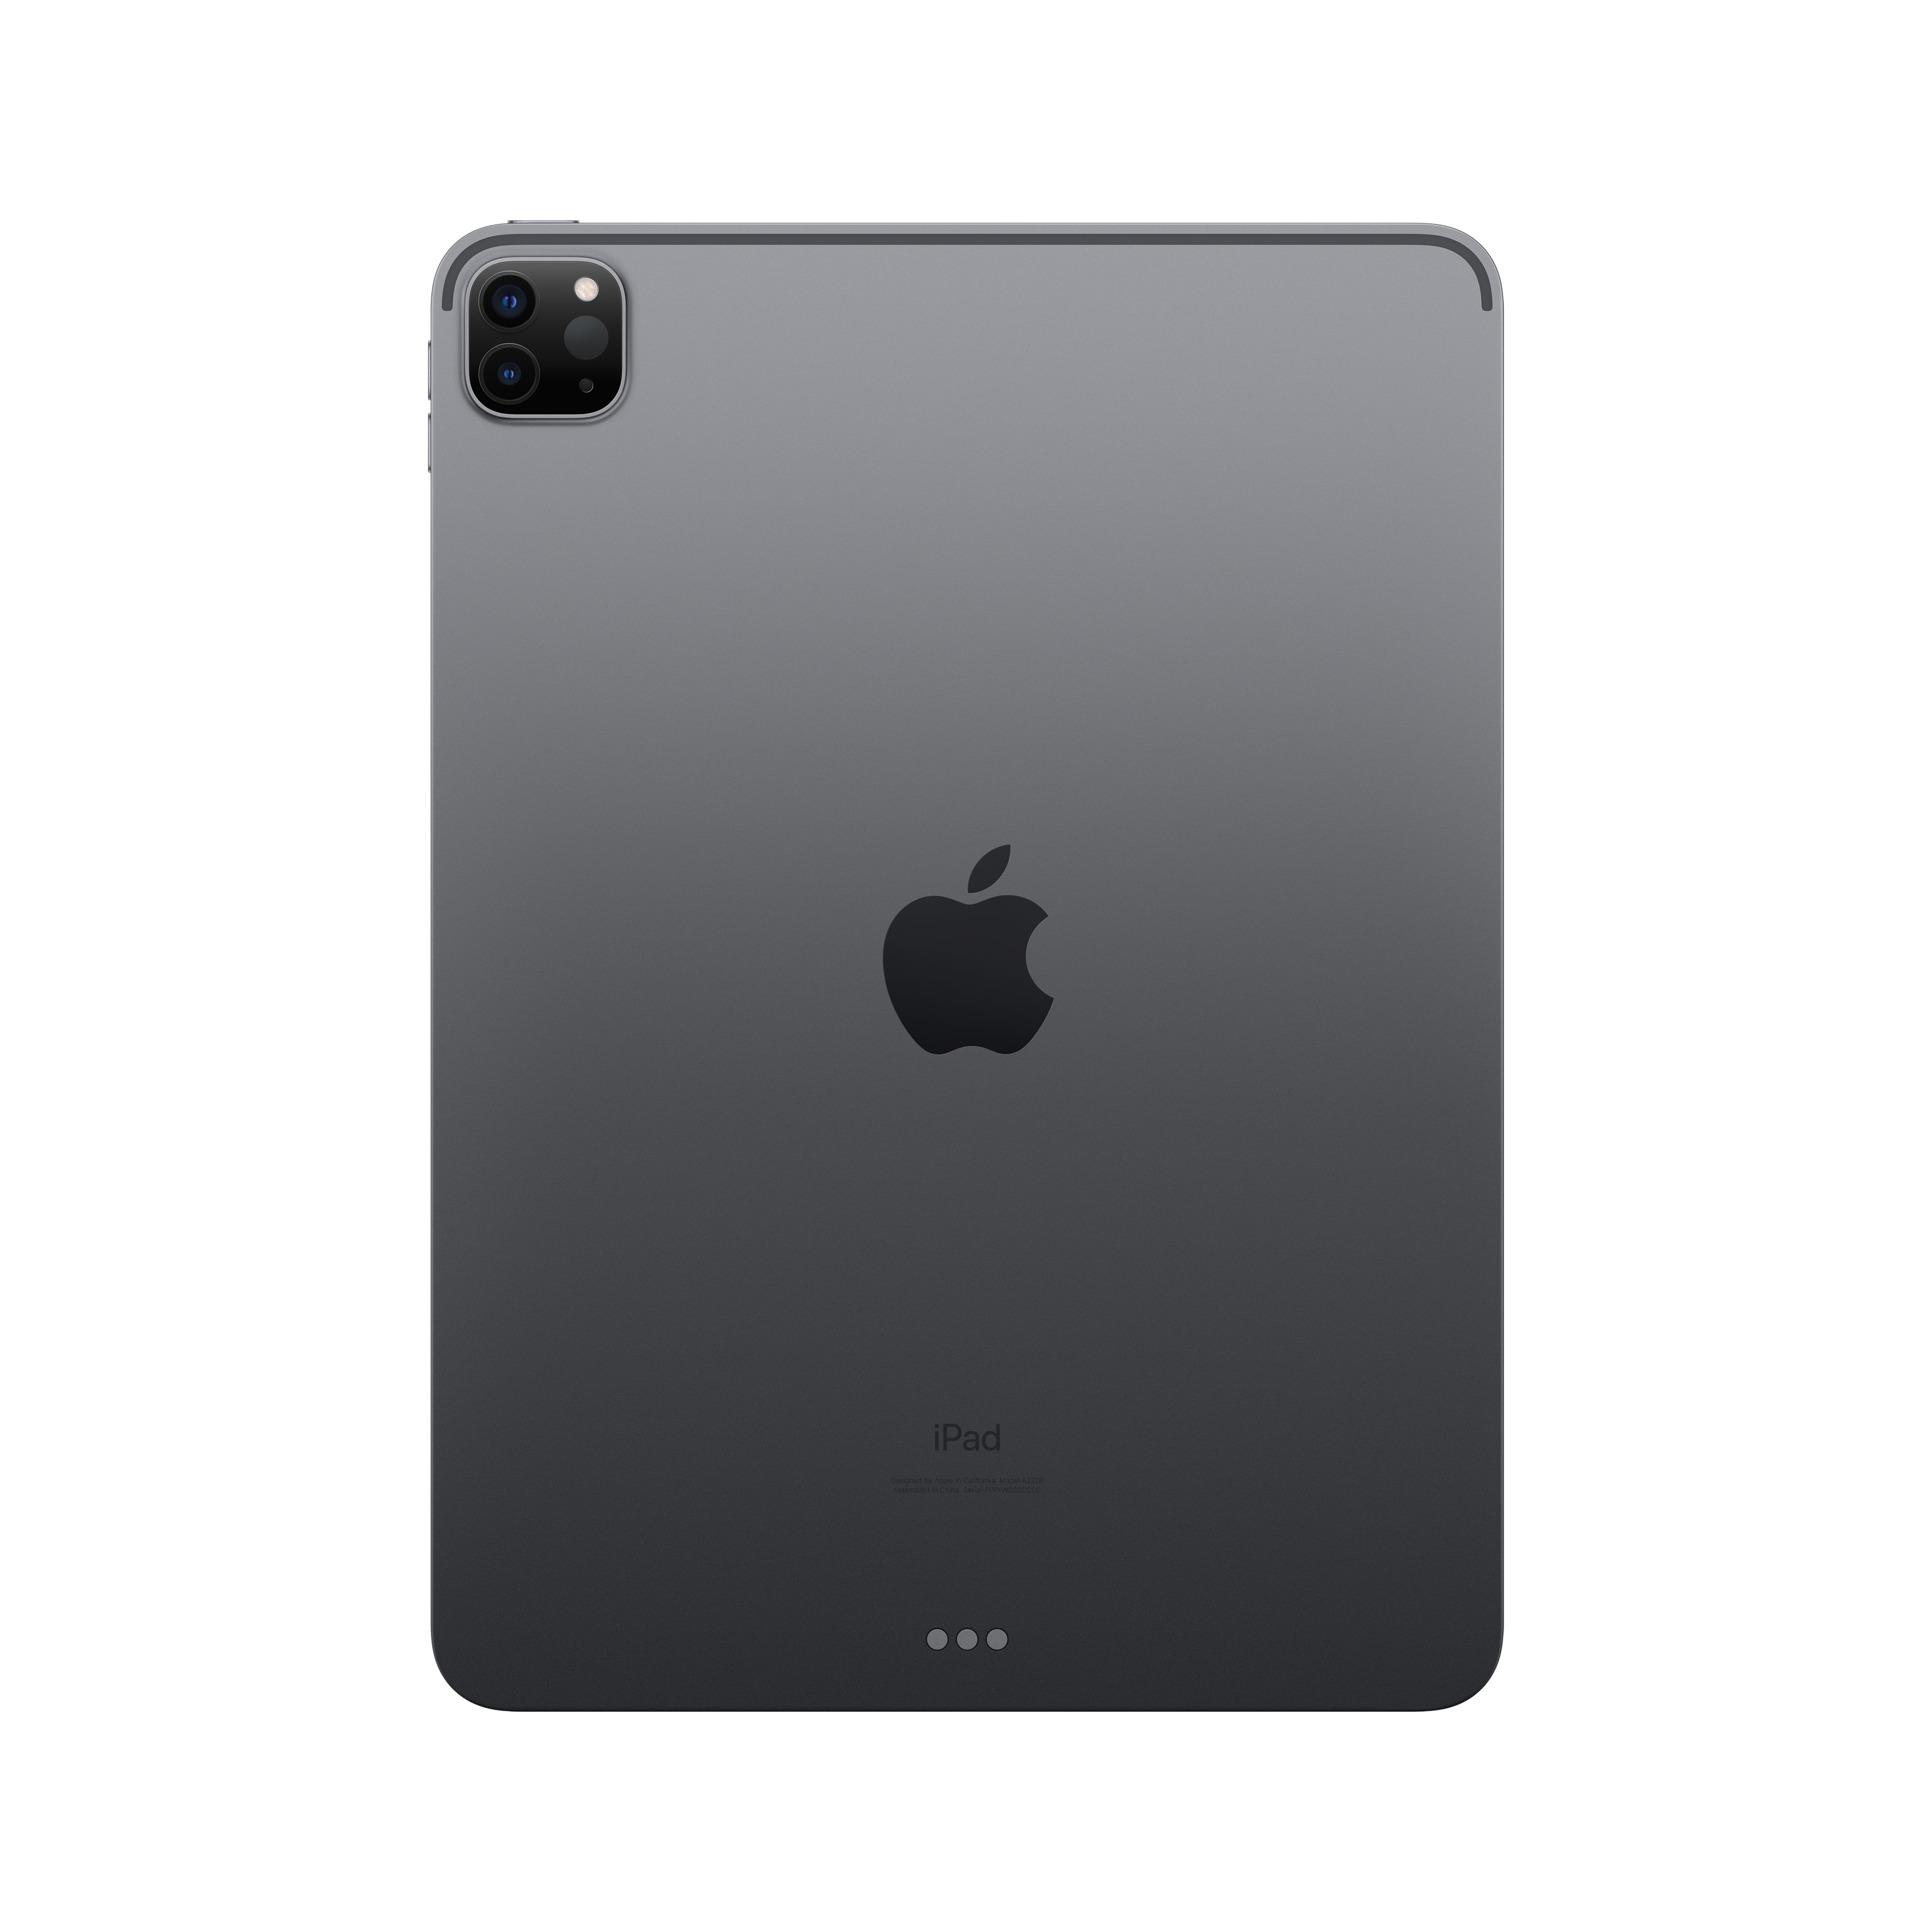 Apple 11-inch iPad Pro (2020) Wi-Fi 128GB - Space Gray - Walmart.com